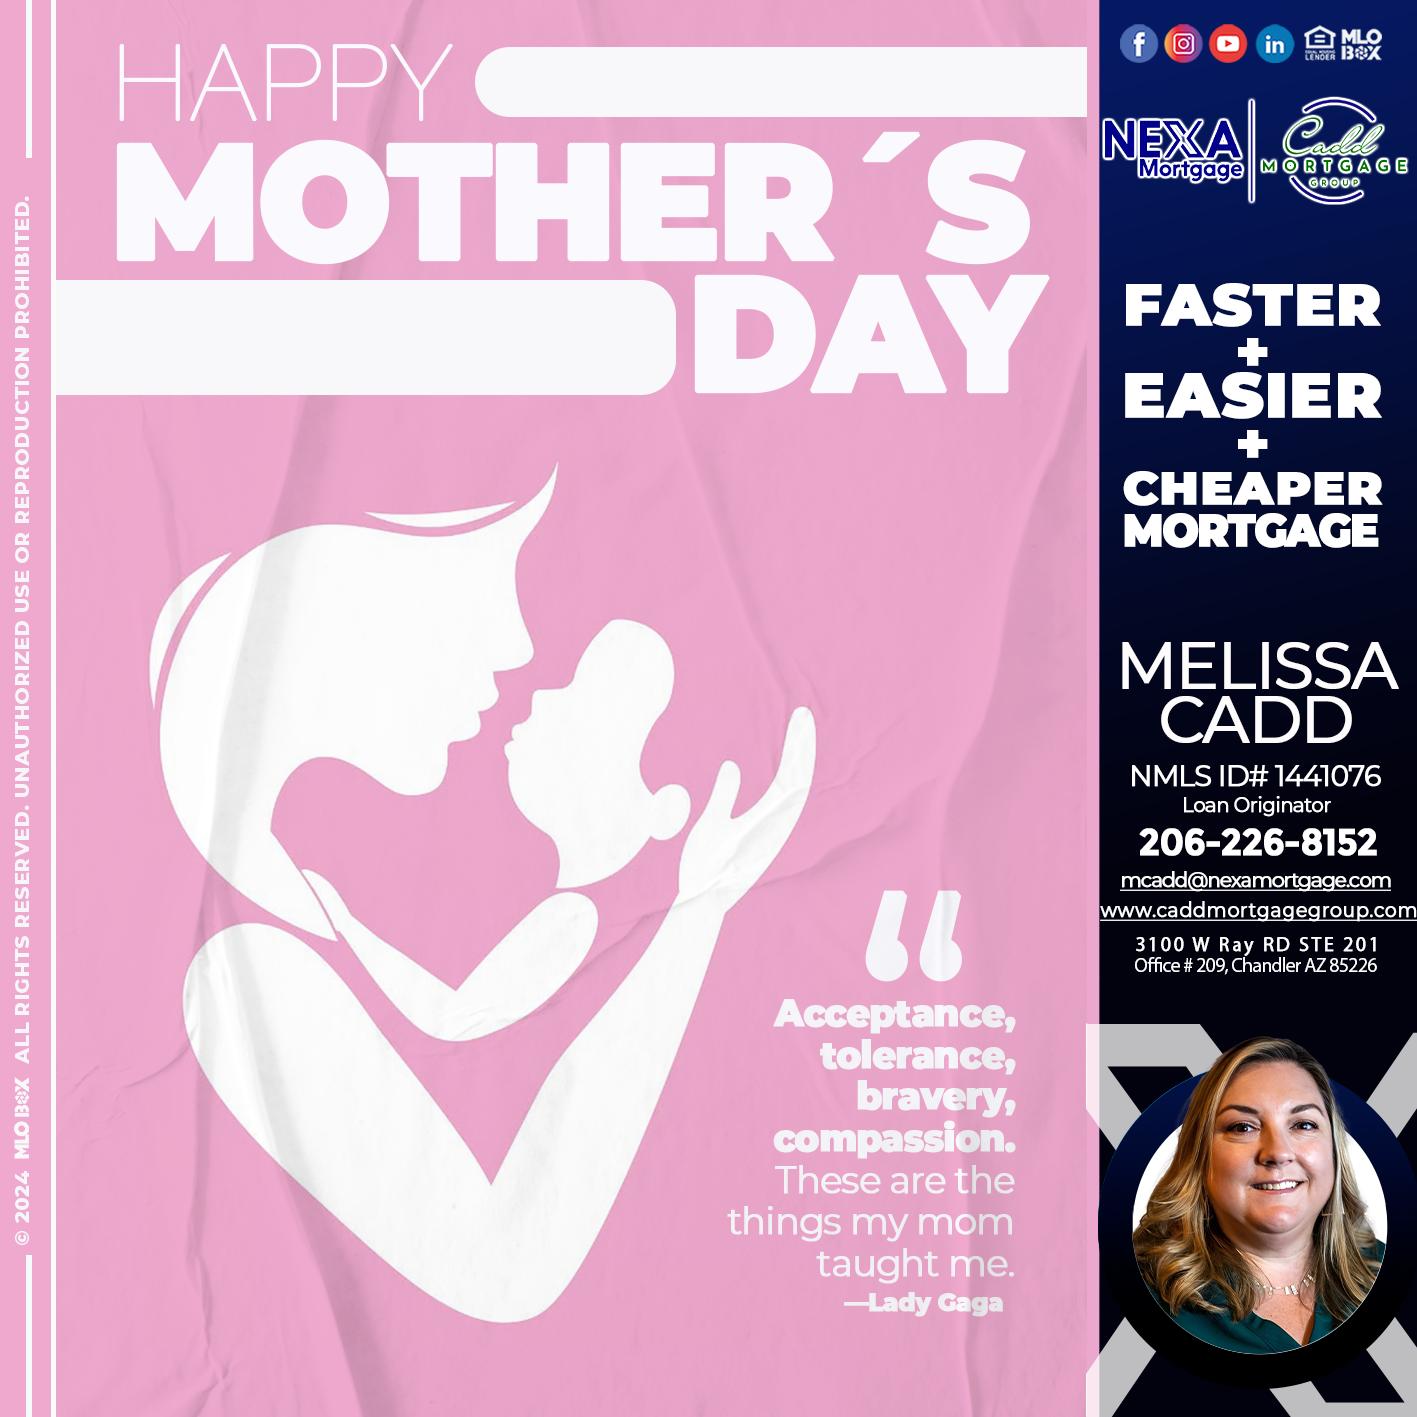 MOTHERS DAY - Melissa Cadd -Loan Originator